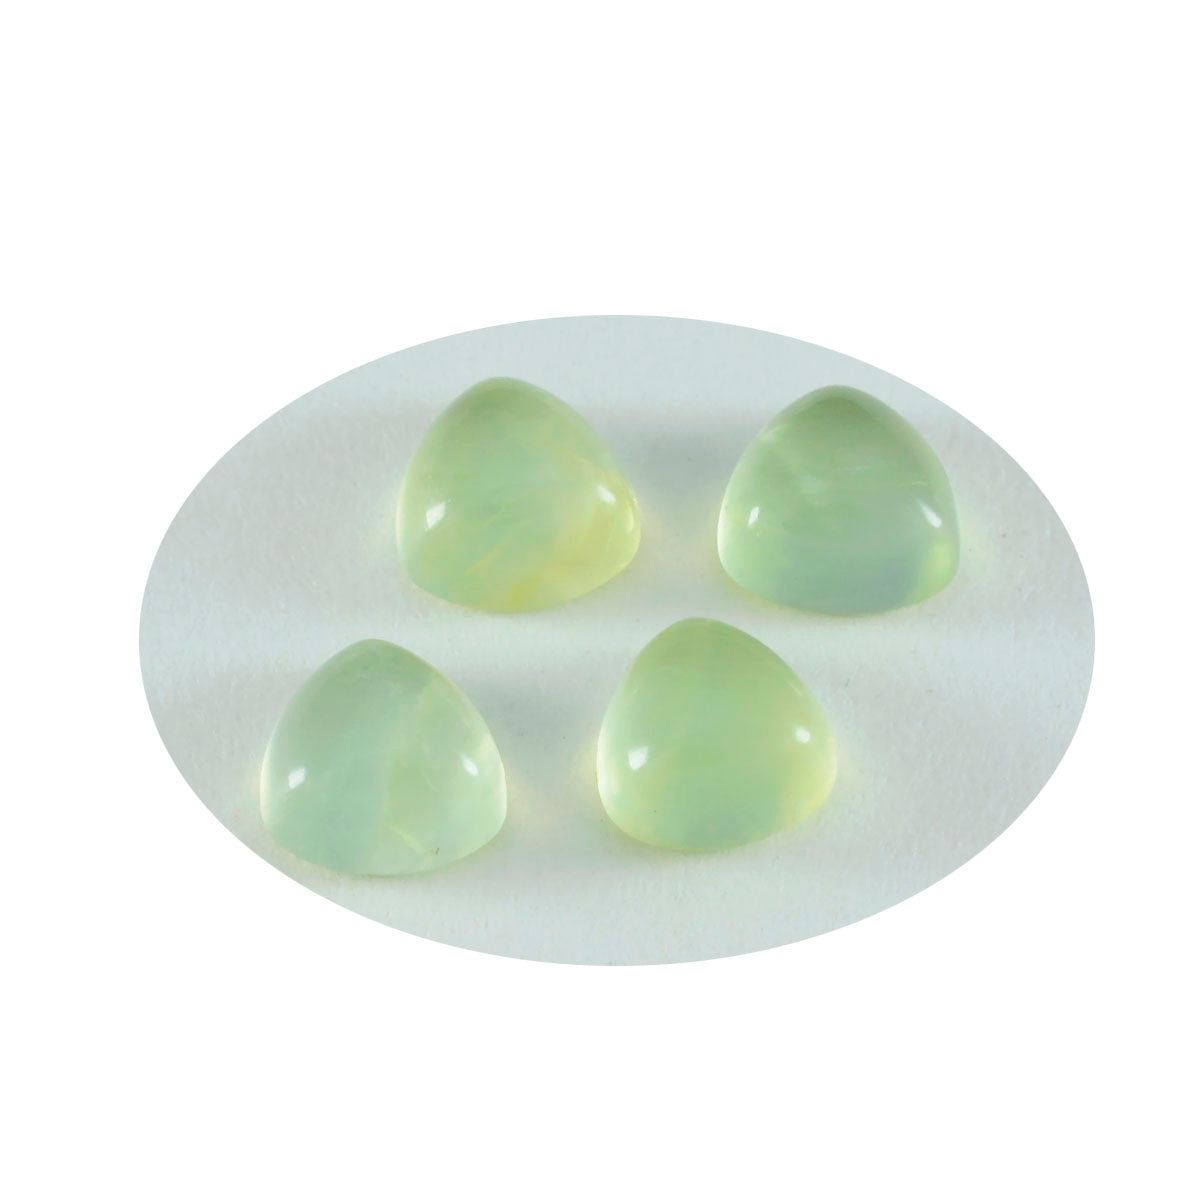 Riyogems 1PC Green Prehnite Cabochon 14x14 mm Trillion Shape sweet Quality Loose Gemstone